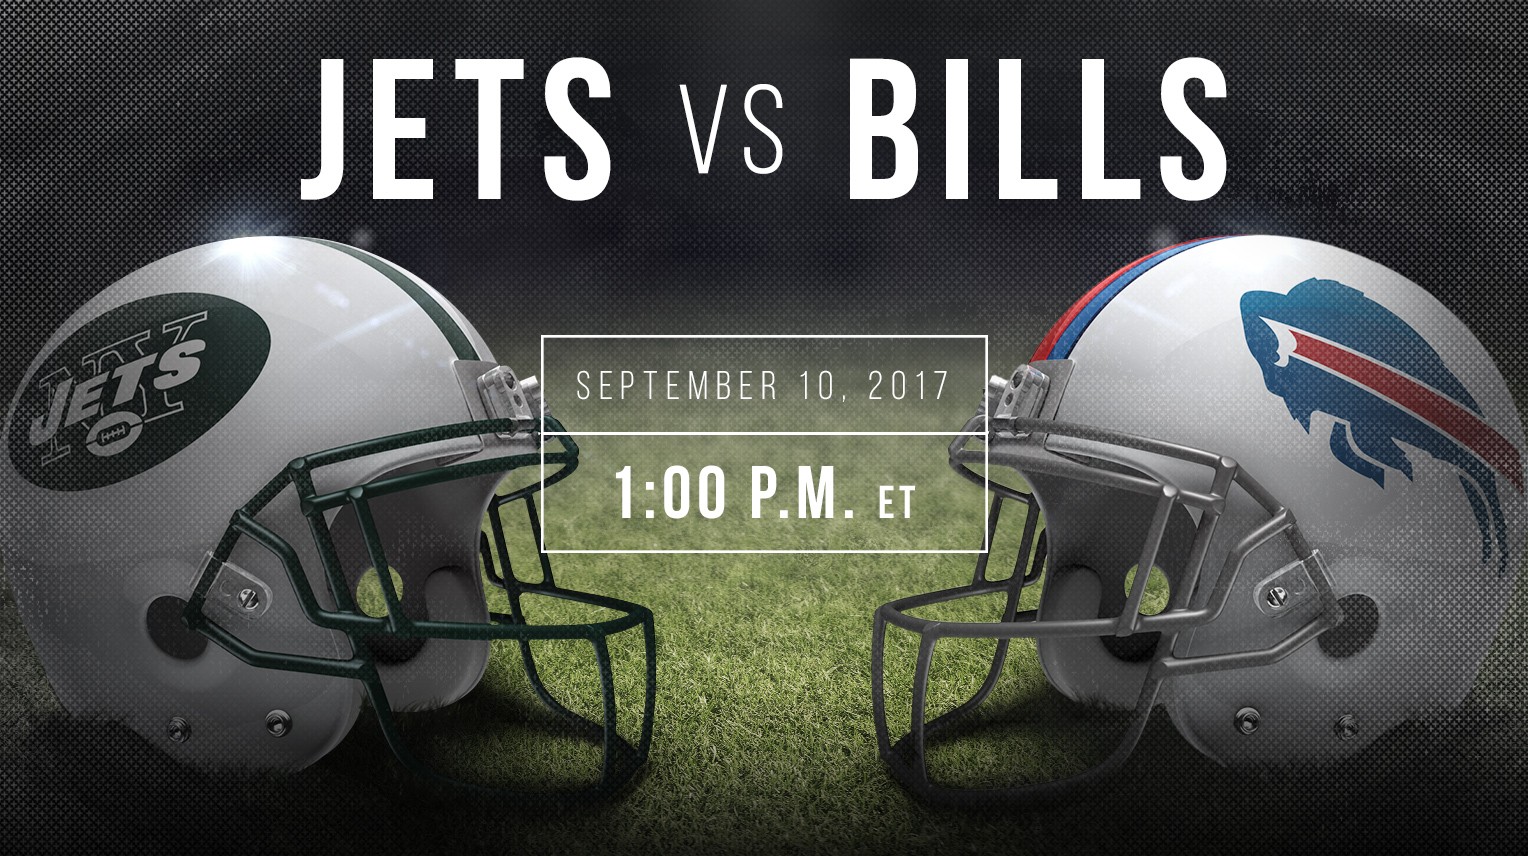 How to watch Jets vs. Bills